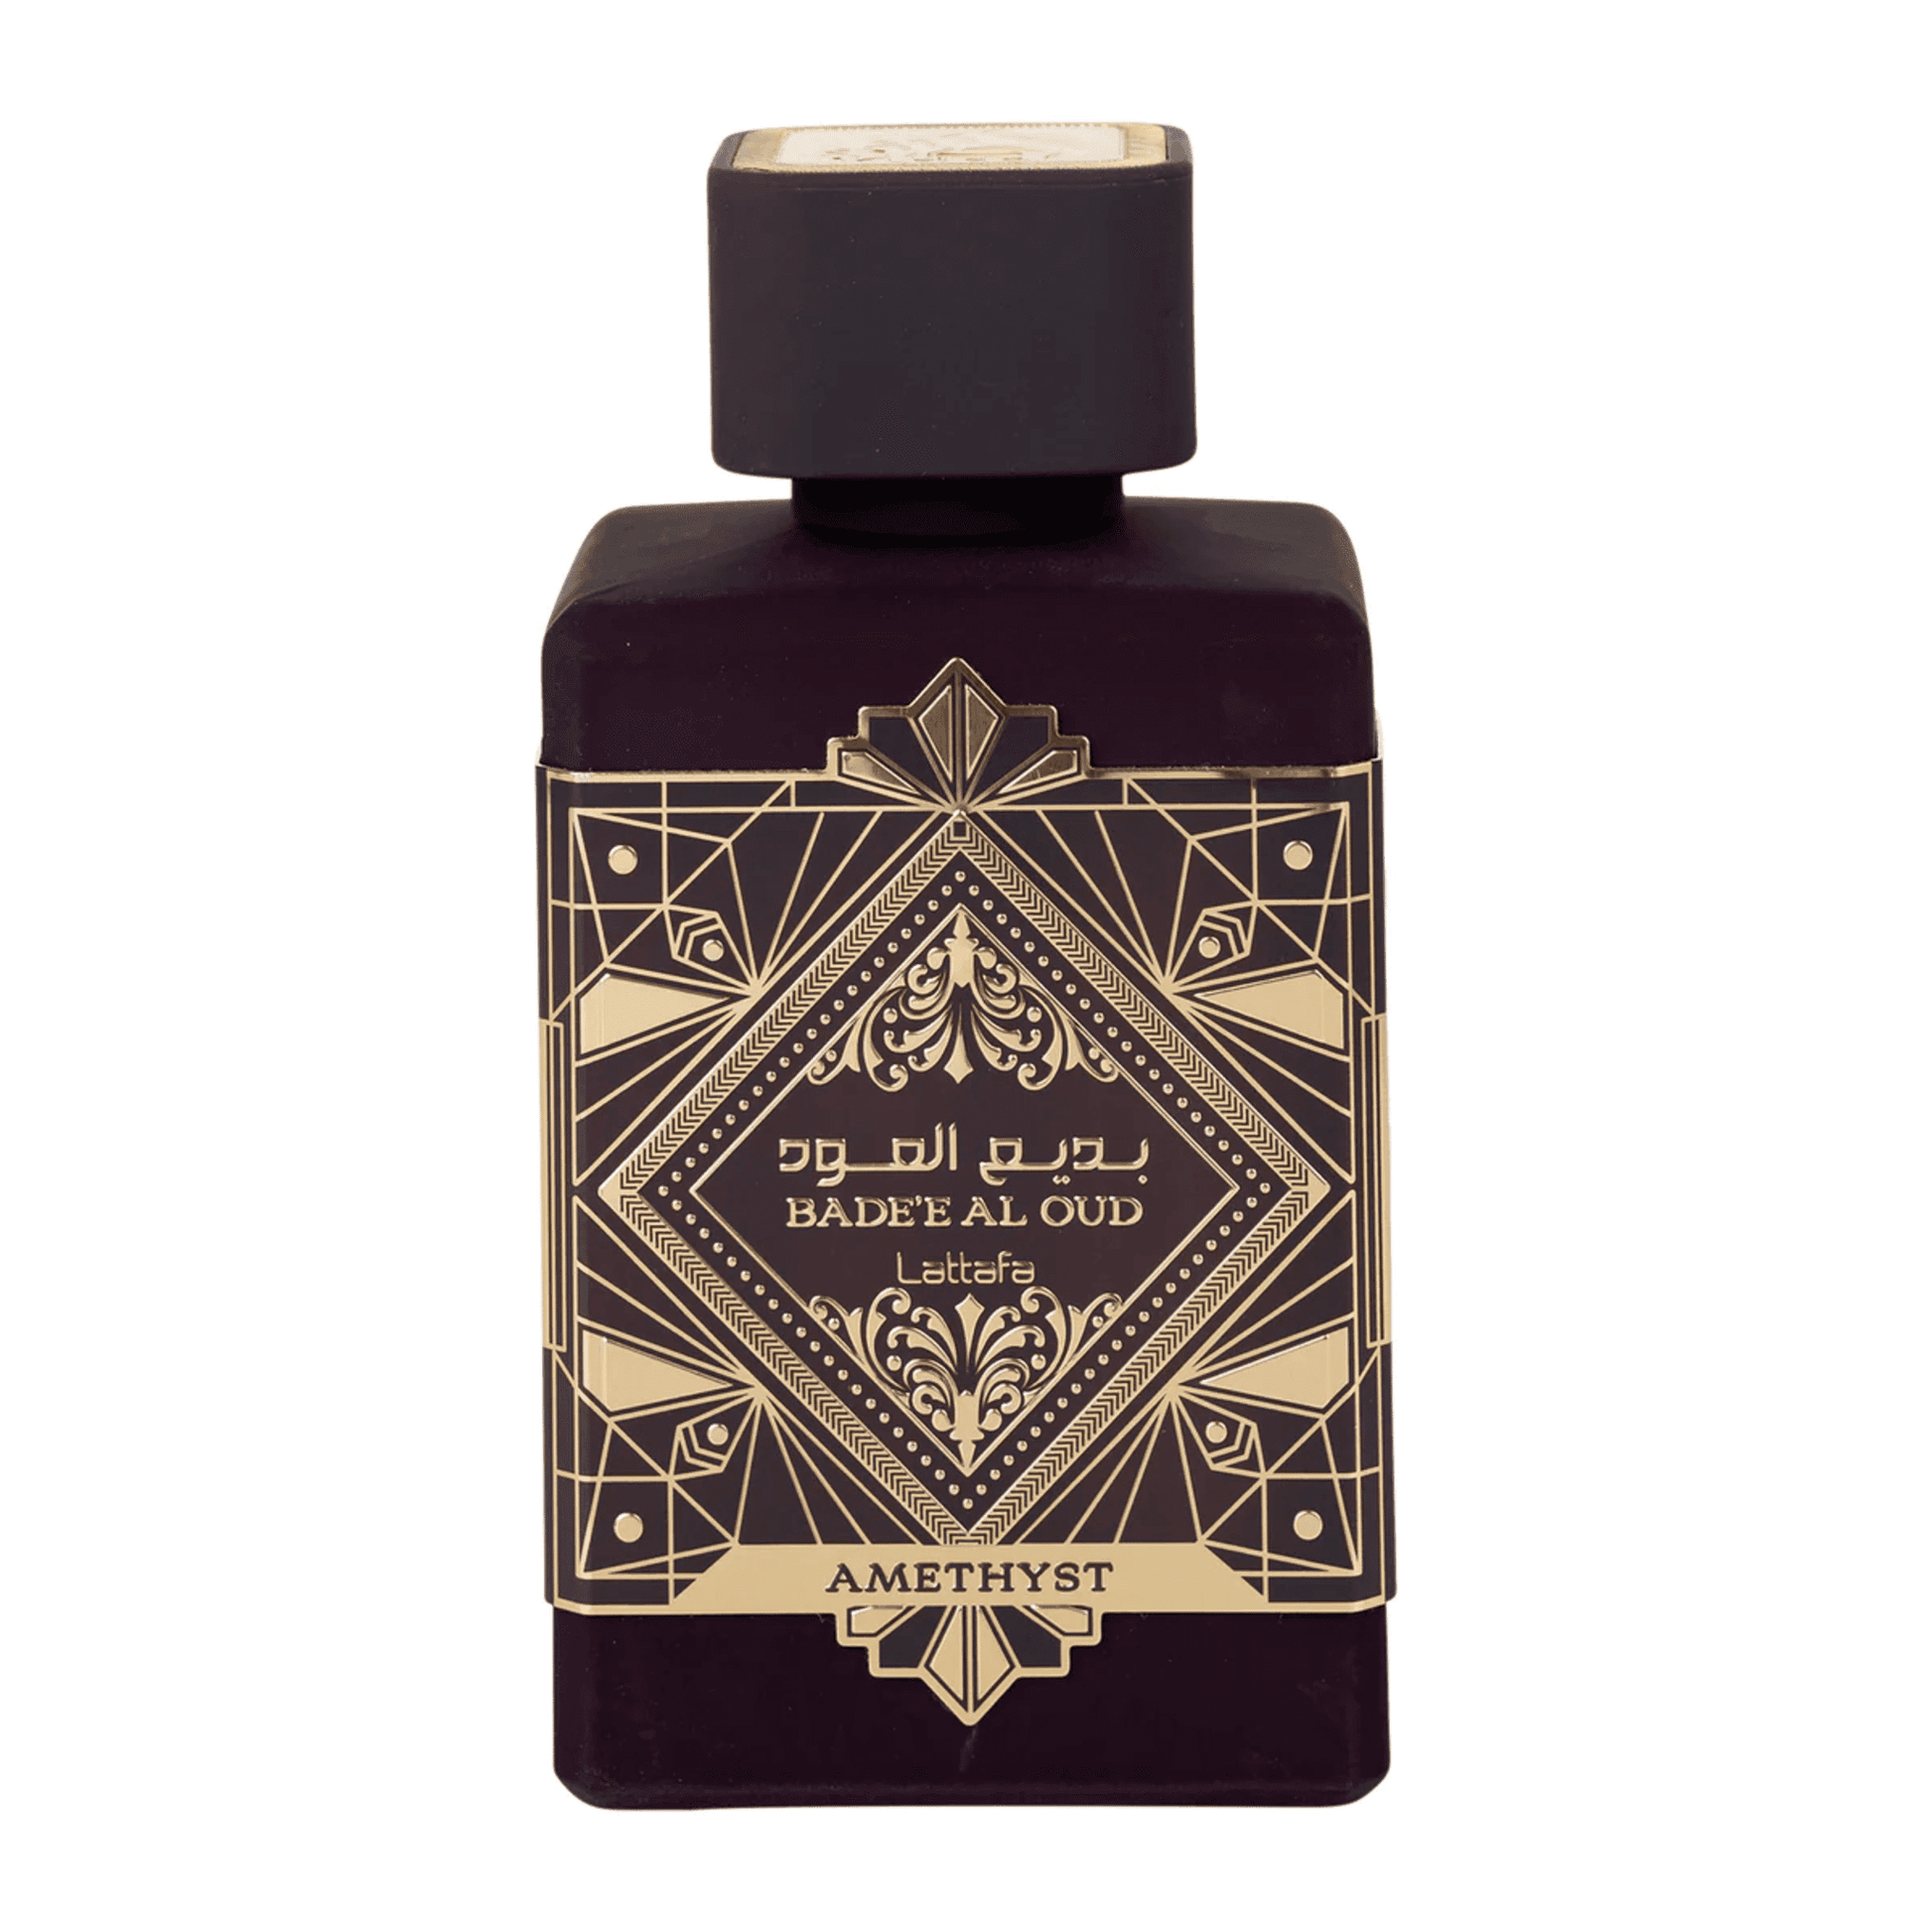 Bade’e Al Oud Amethyst, the opulent unisex perfume by Lattafa